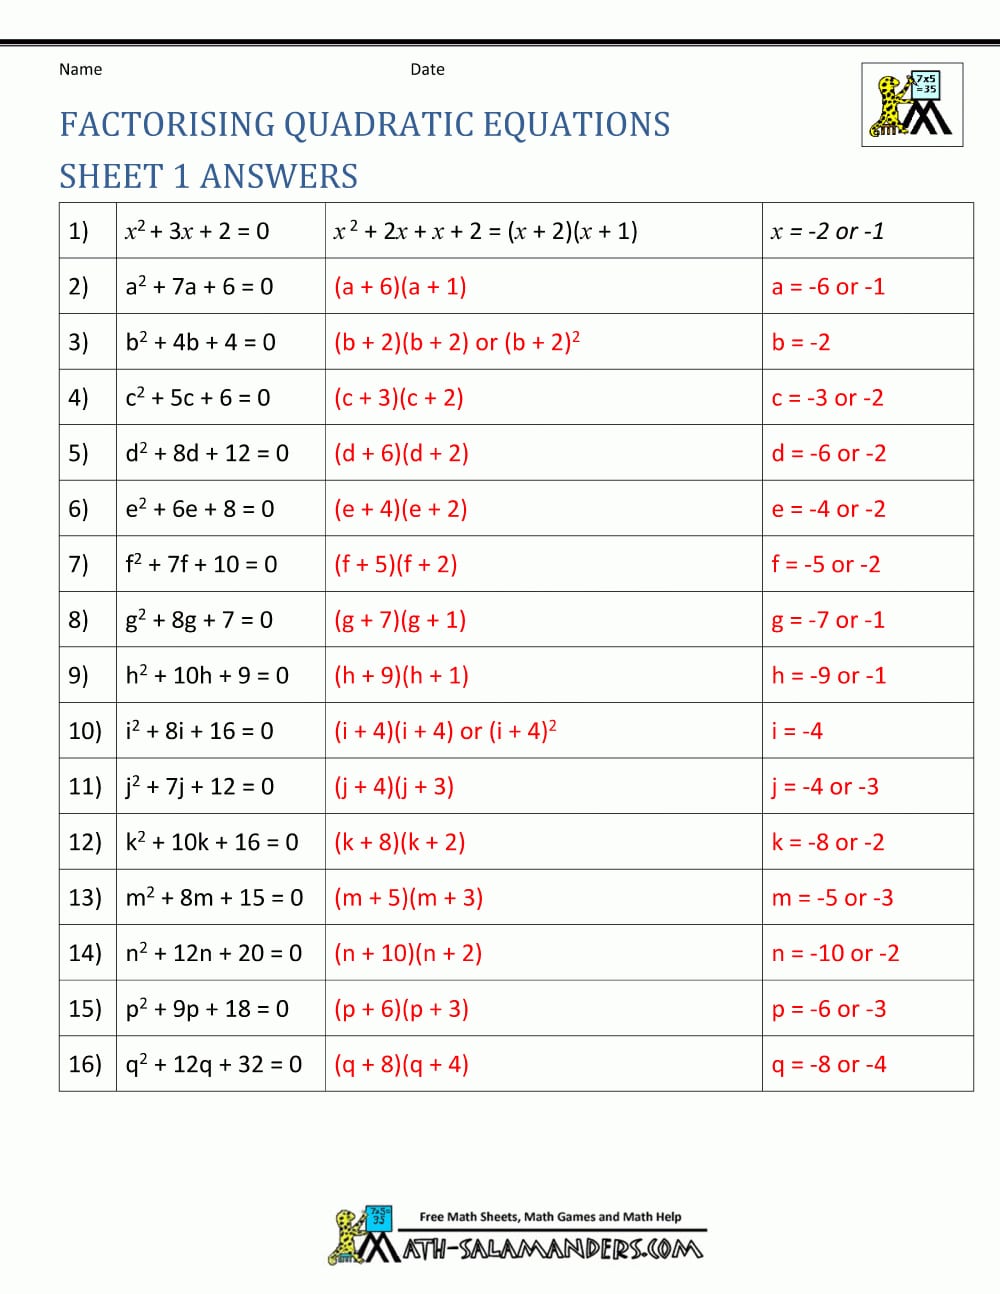 Factoring Quadratic Equations Along With Factoring Quadratics Worksheet Answers